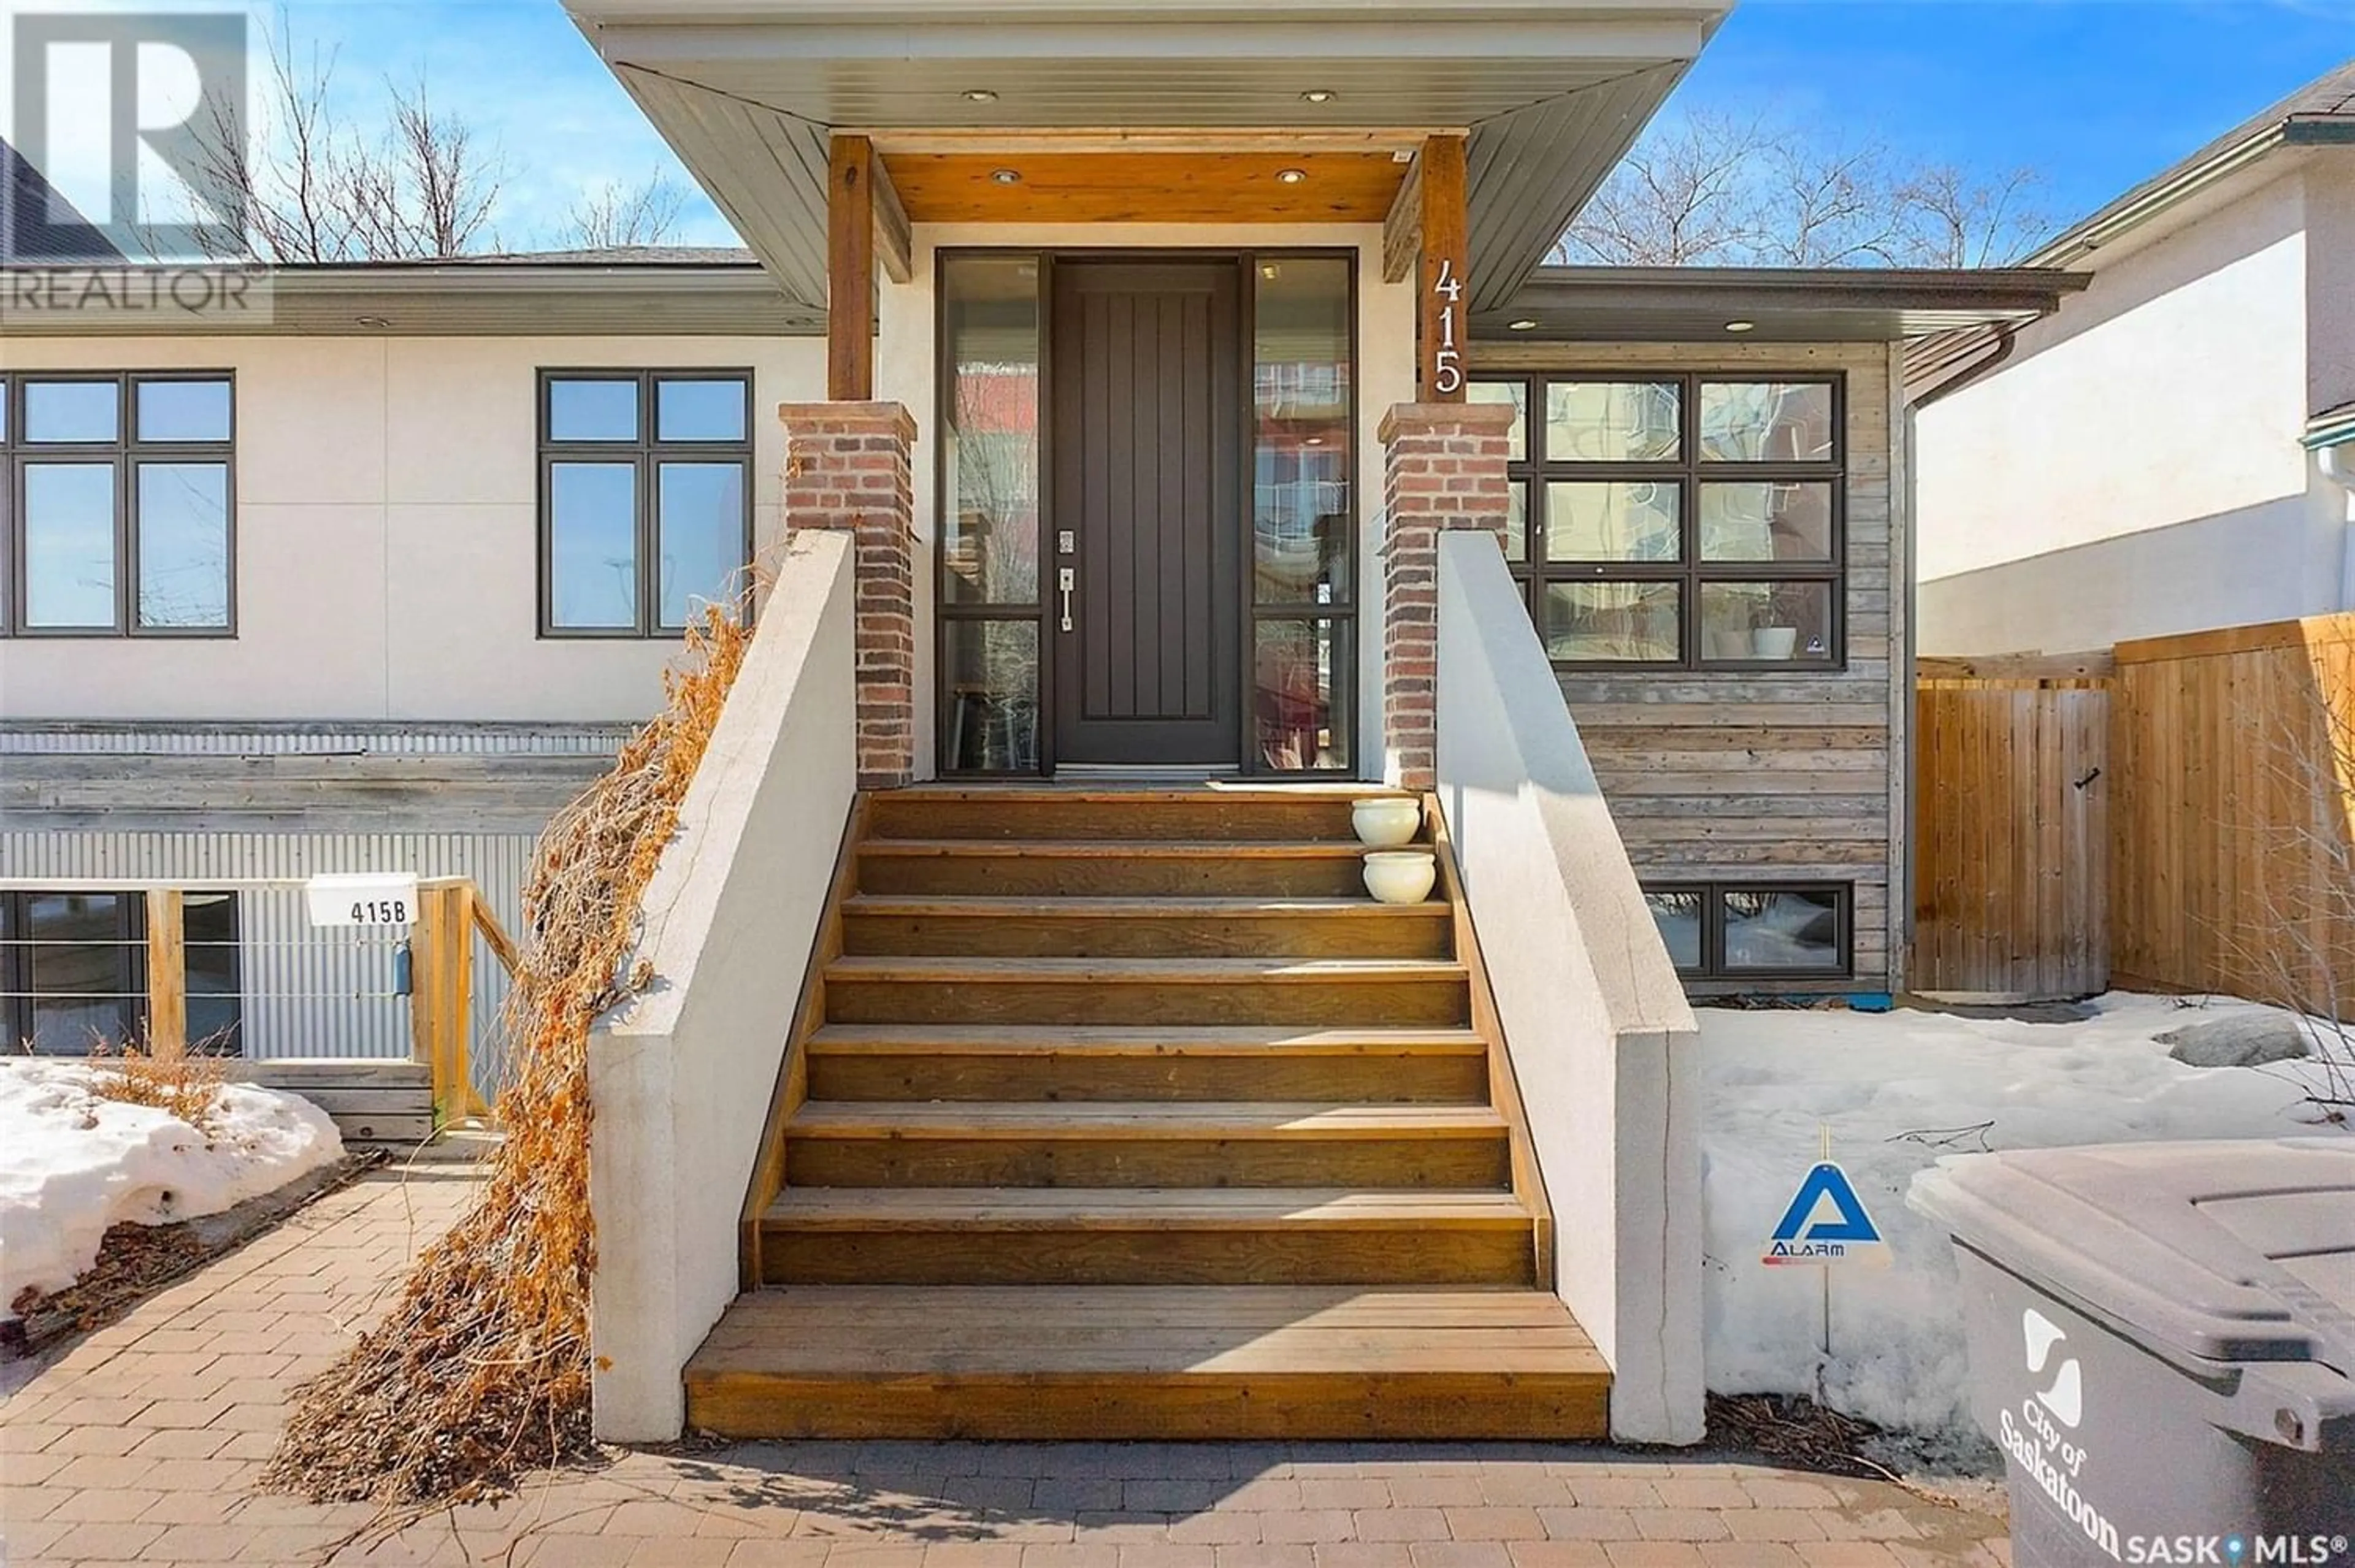 Home with brick exterior material for 415 C AVENUE S, Saskatoon Saskatchewan S7M1N6